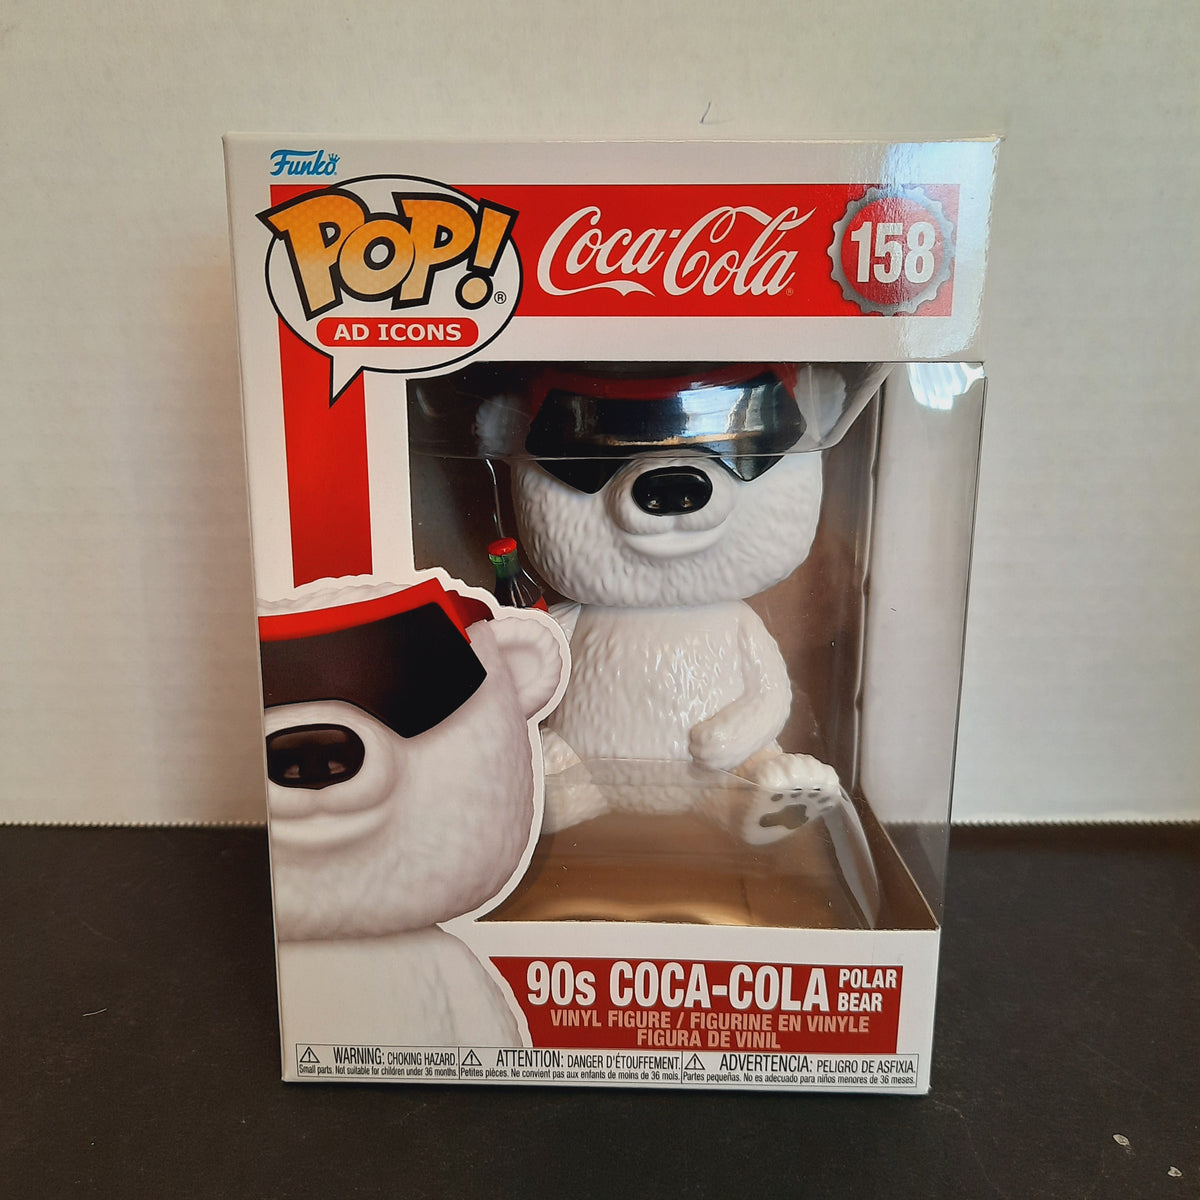 Buy Pop! 90s Coca-Cola Polar Bear at Funko.